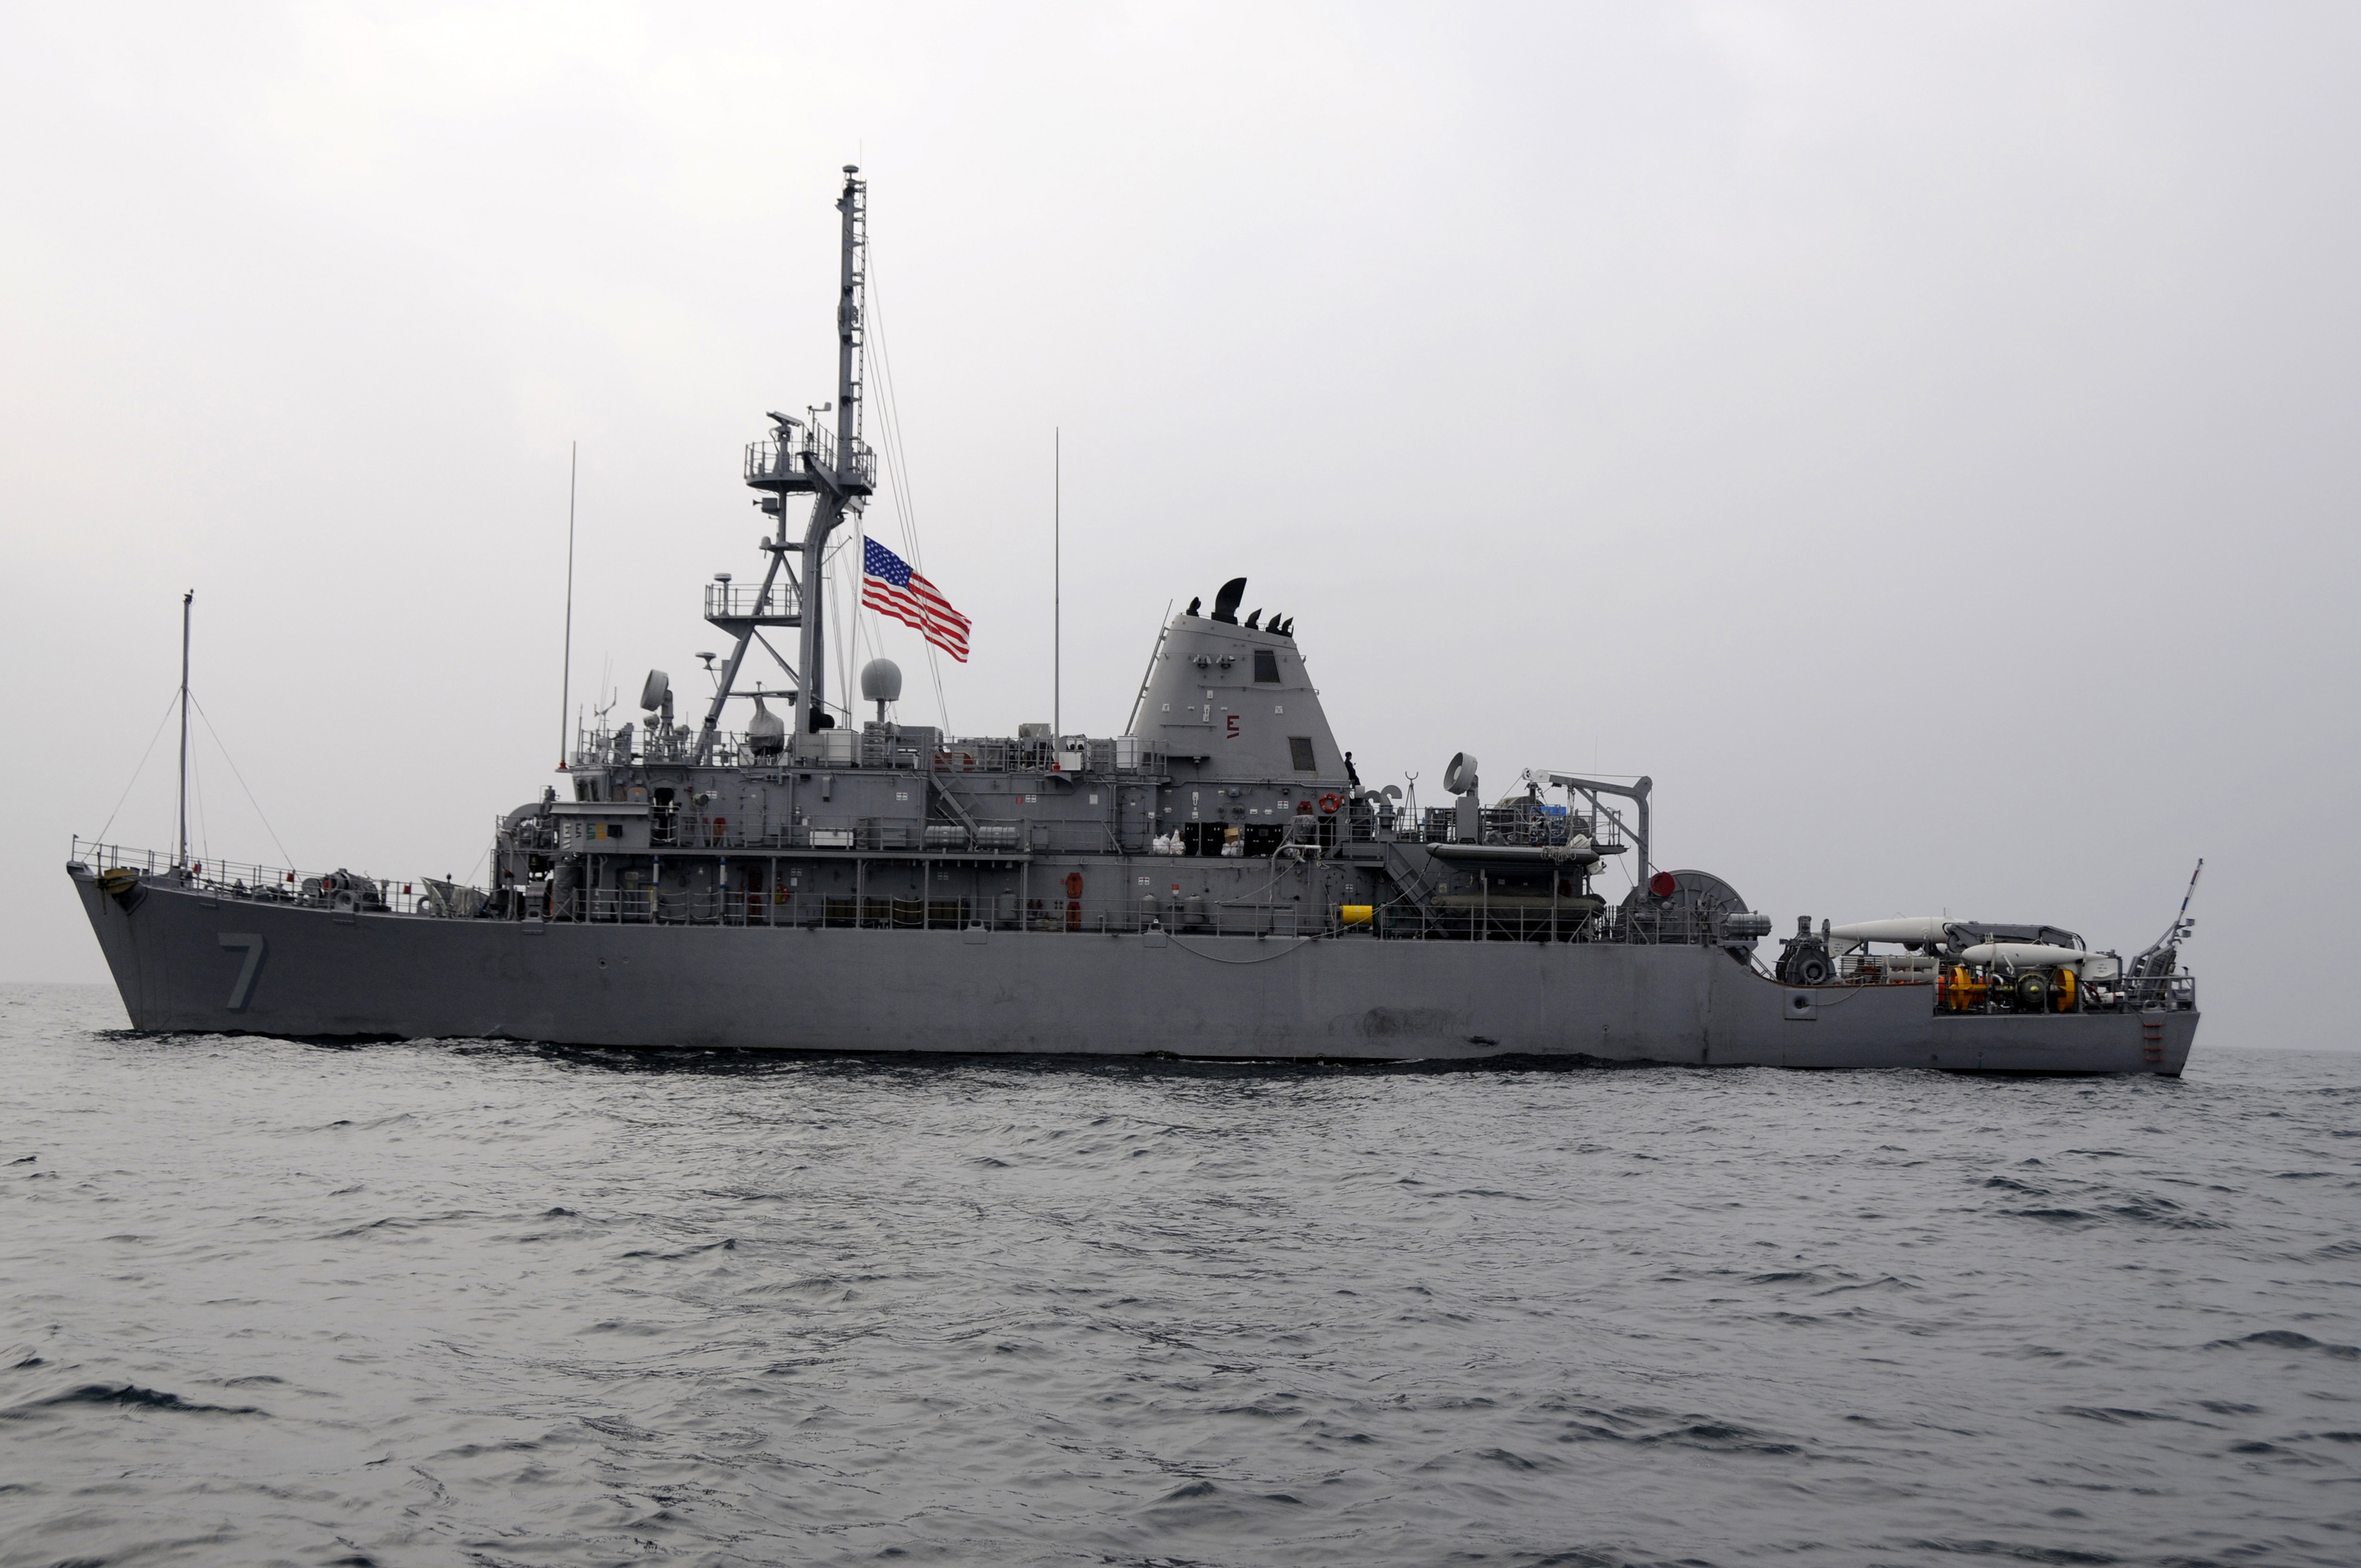 US_Navy_091126-N-8335D-450_The_mine_countermeasures_ship_USS_Patriot_%28MCM_7%29_is_underway_in_the_Yellow_Sea.jpg